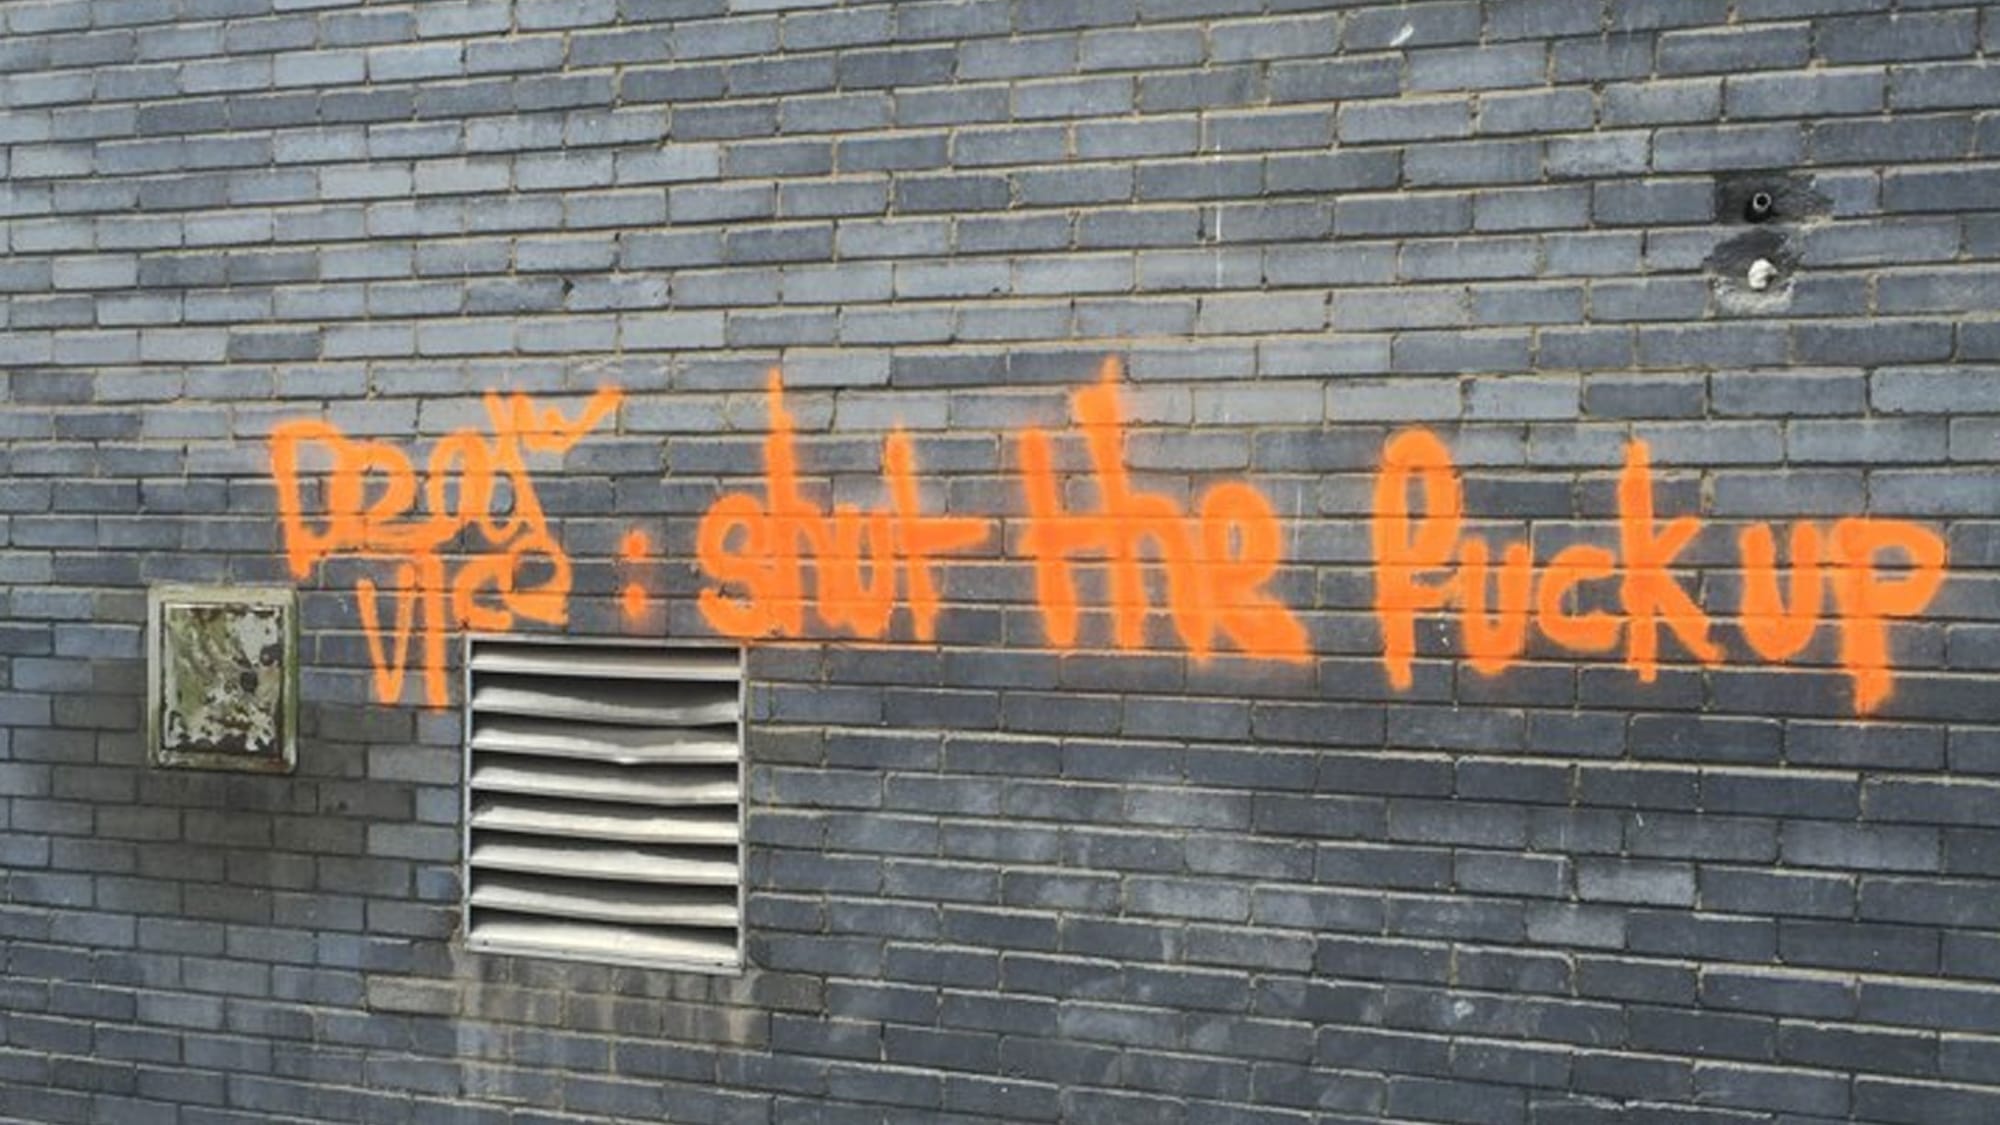 Dear Vice: shut the fuck up': A graffito on exterior wall of gray brick at Vice Magazine HQ, London, 2015